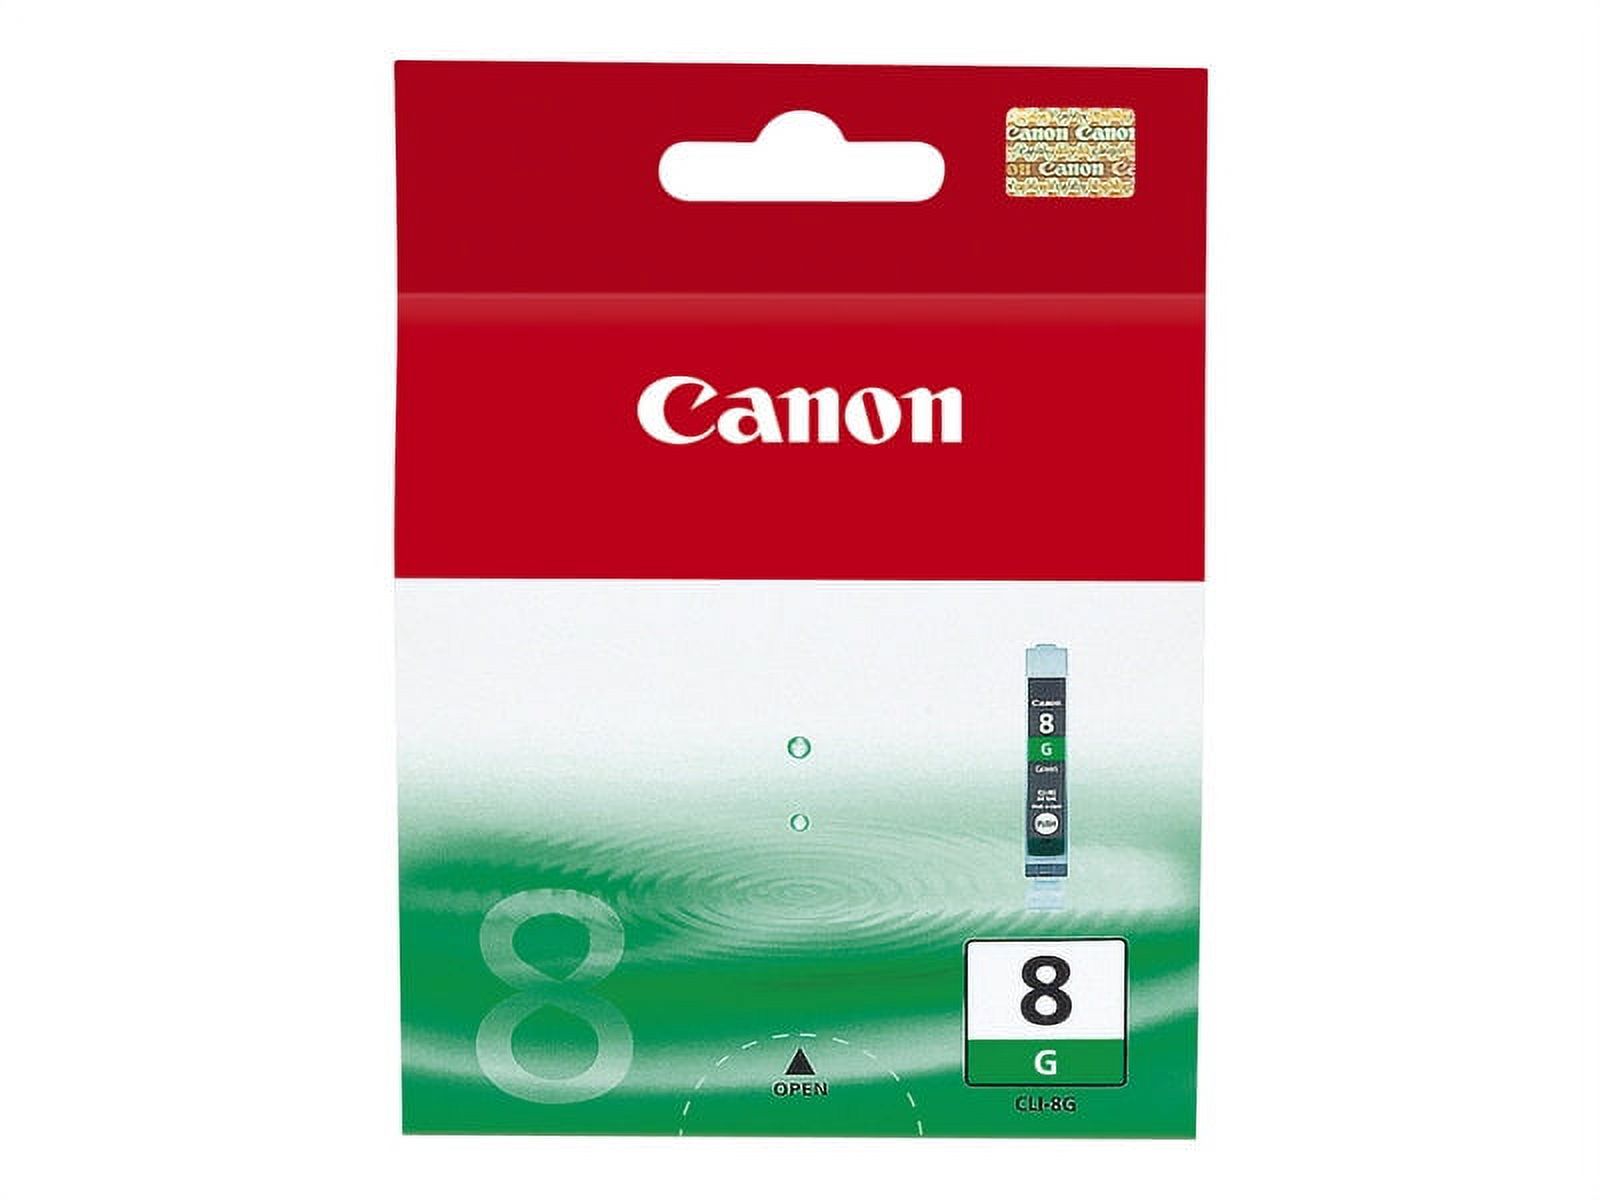 CANON PIXMA PRO9000 Cartridge (280 yield) - image 1 of 2